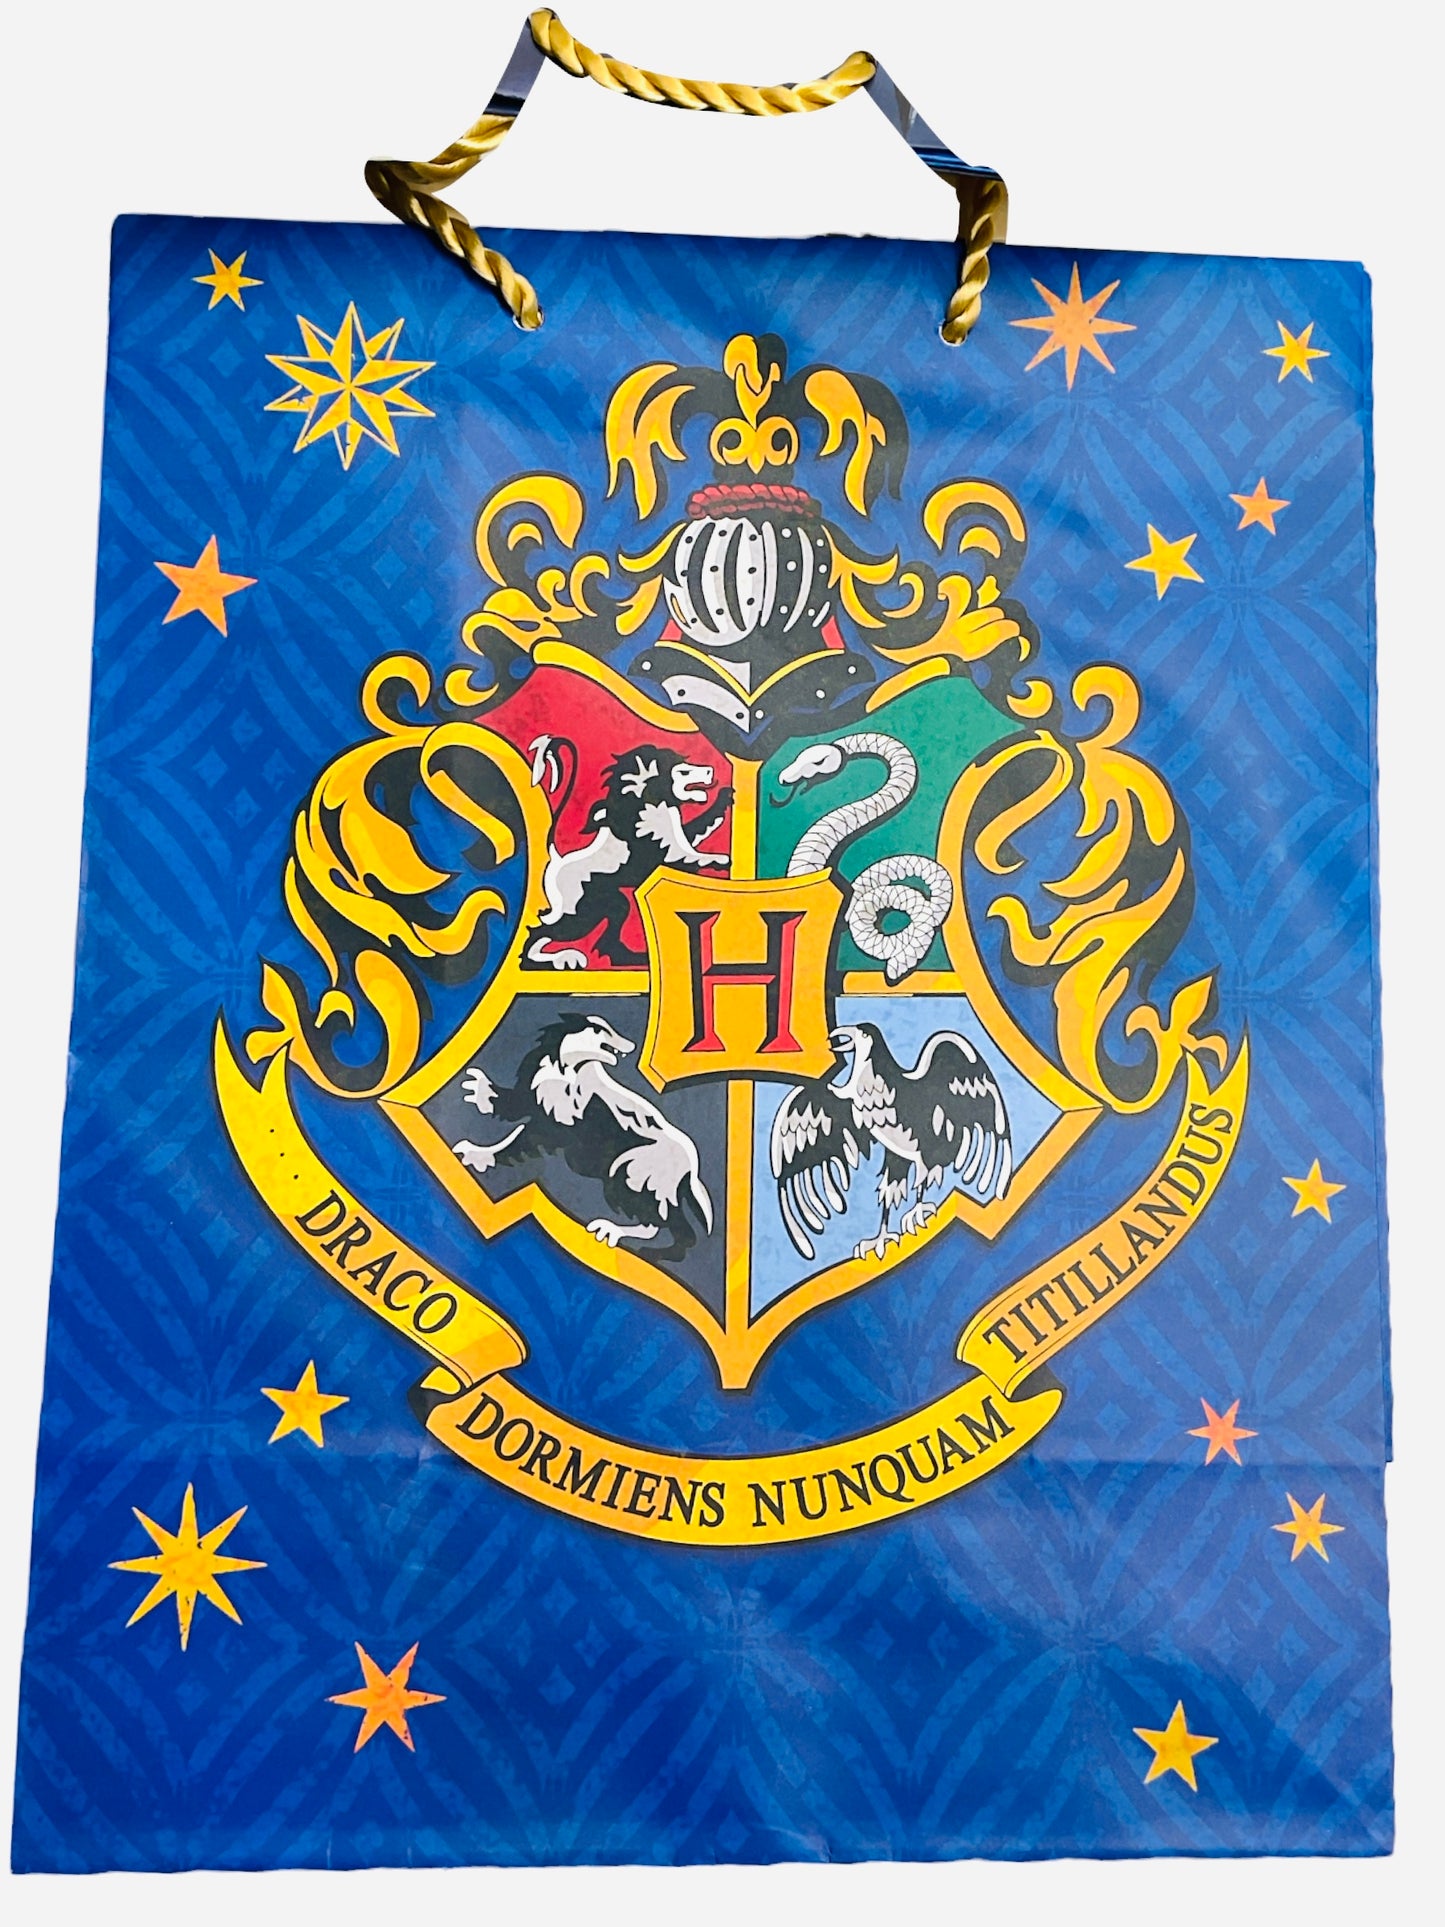 3 Pack Harry Potter Gift Bags (Castle Bag 5.5”x6.5” )(Symbol Bag 7.5”x9.5”) (Map Bag 13”x10”)